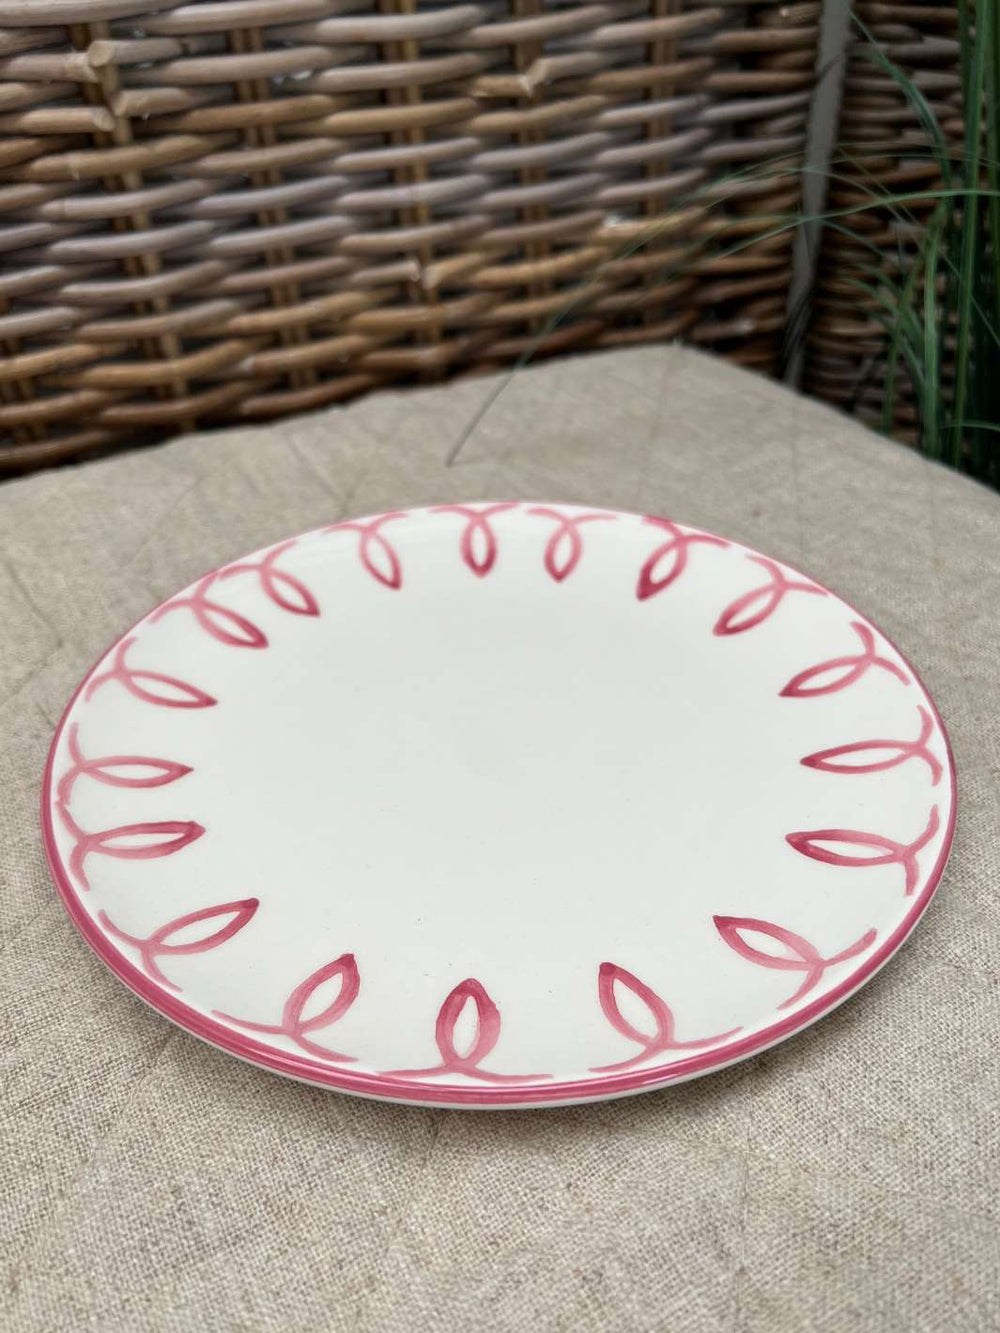 Rivièra Maison Frühstücksteller aus der Menton Serie in rosa